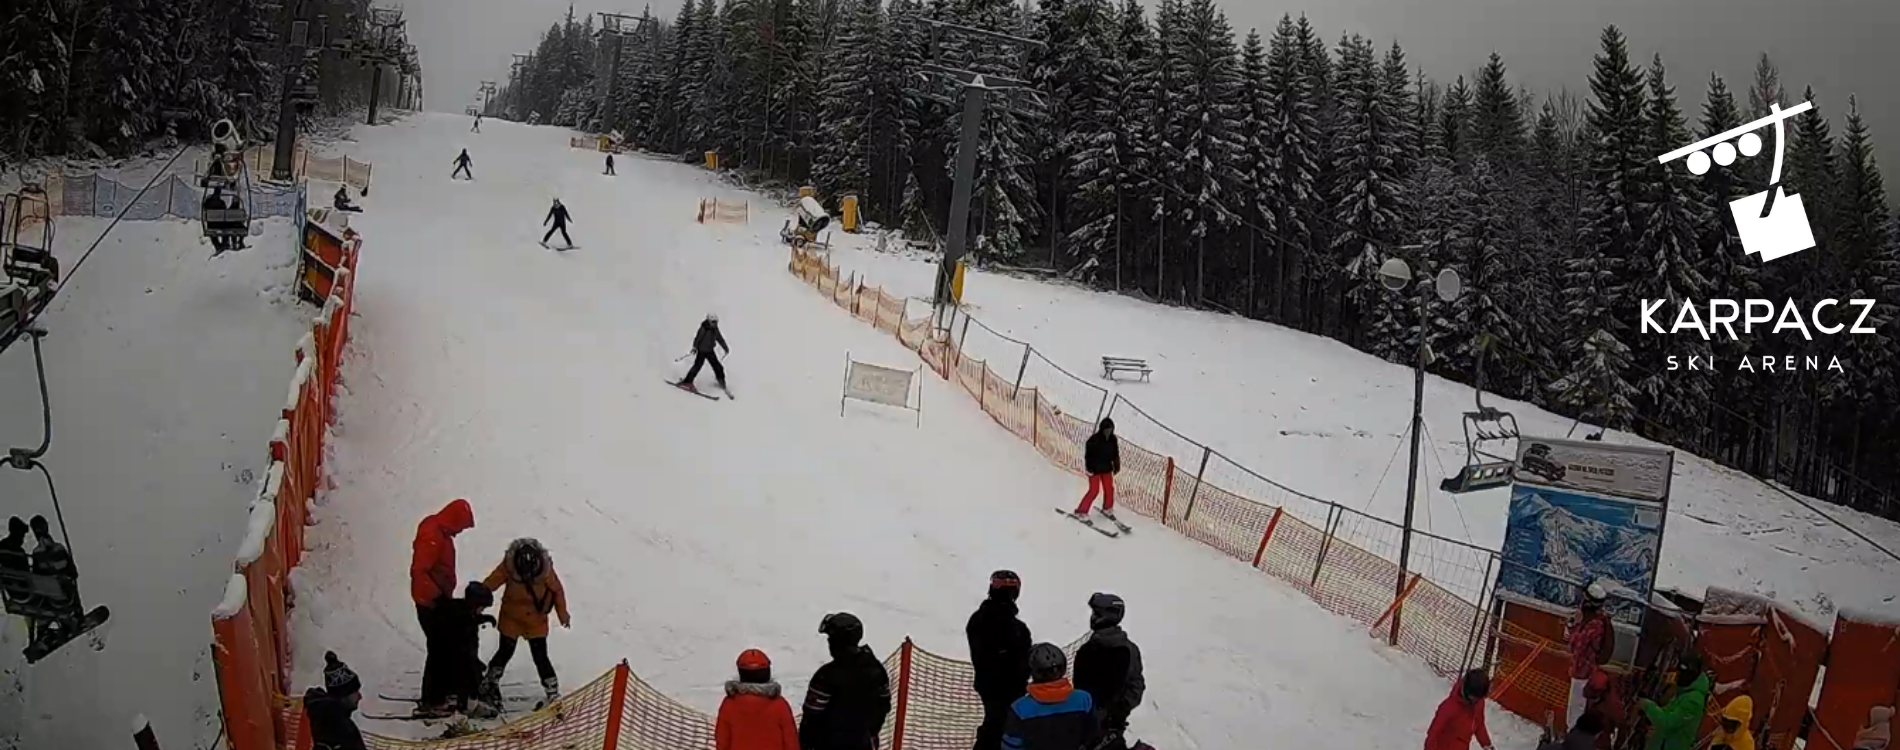 Sylwester W Karpaczu Komunikat Narciarski Karpacz Ski Arena